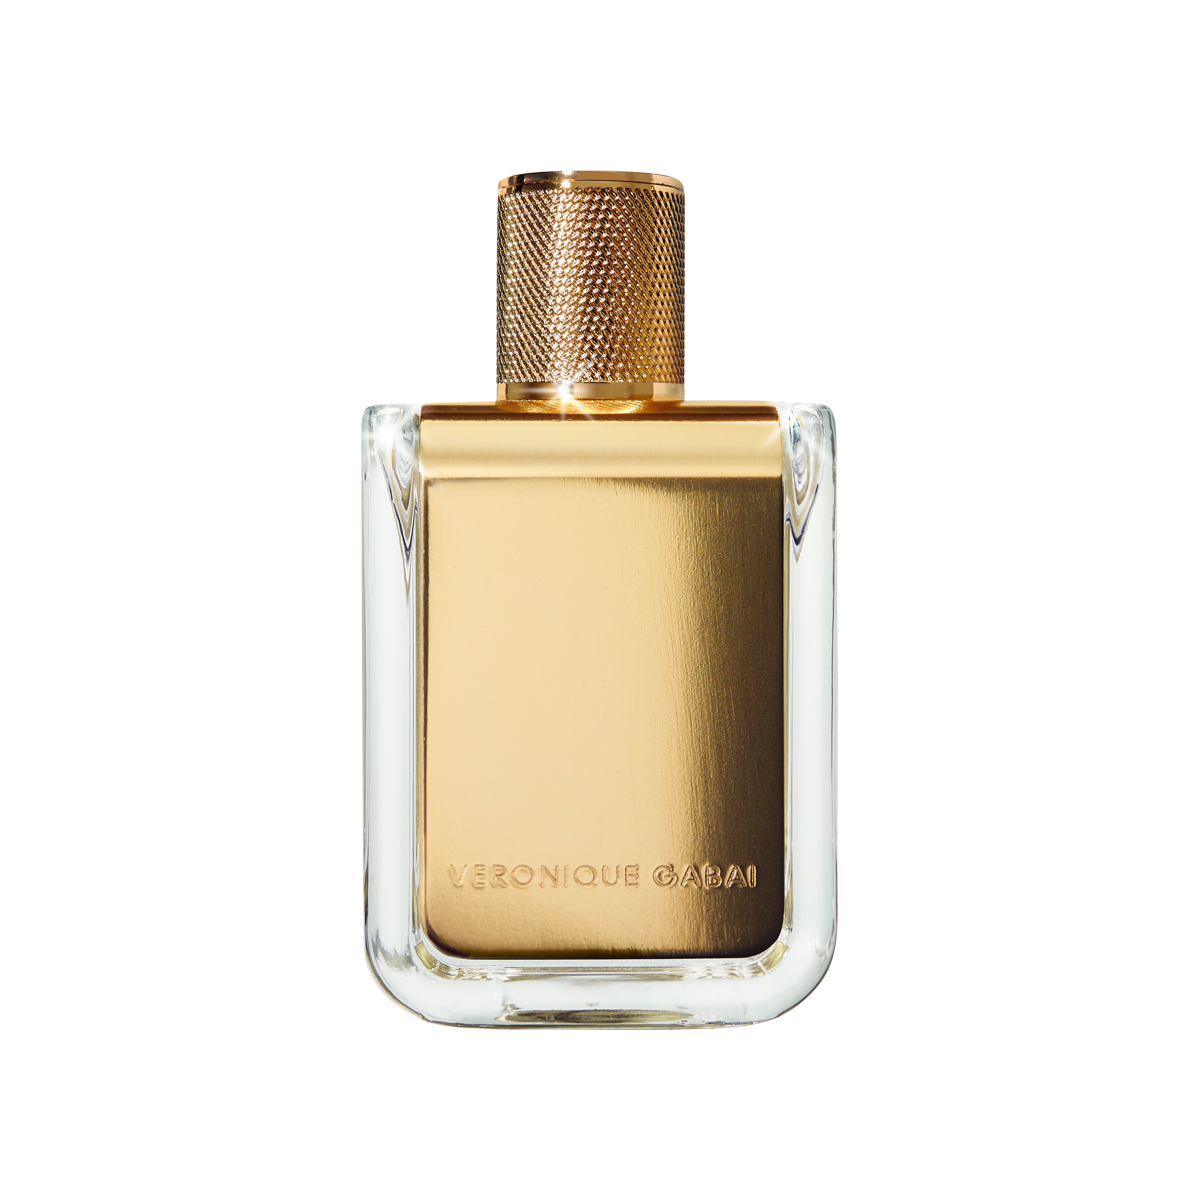 Veronique Gabai - Oud Elixir Eau de Parfum